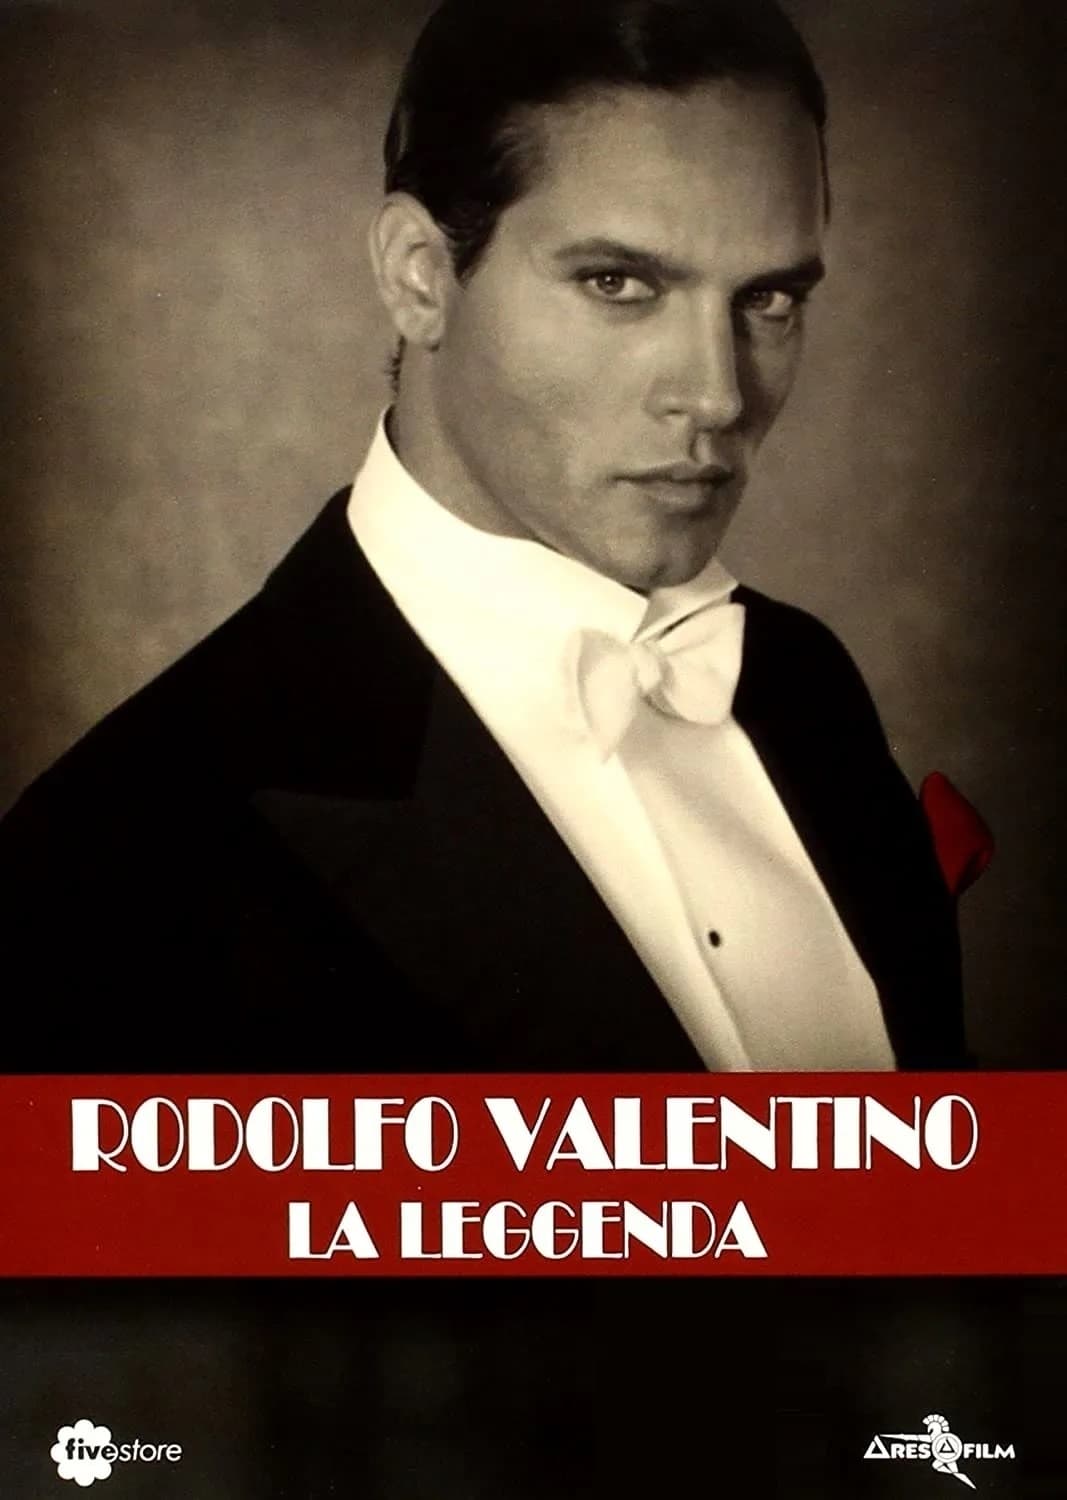 Rodolfo Valentino: La leggenda